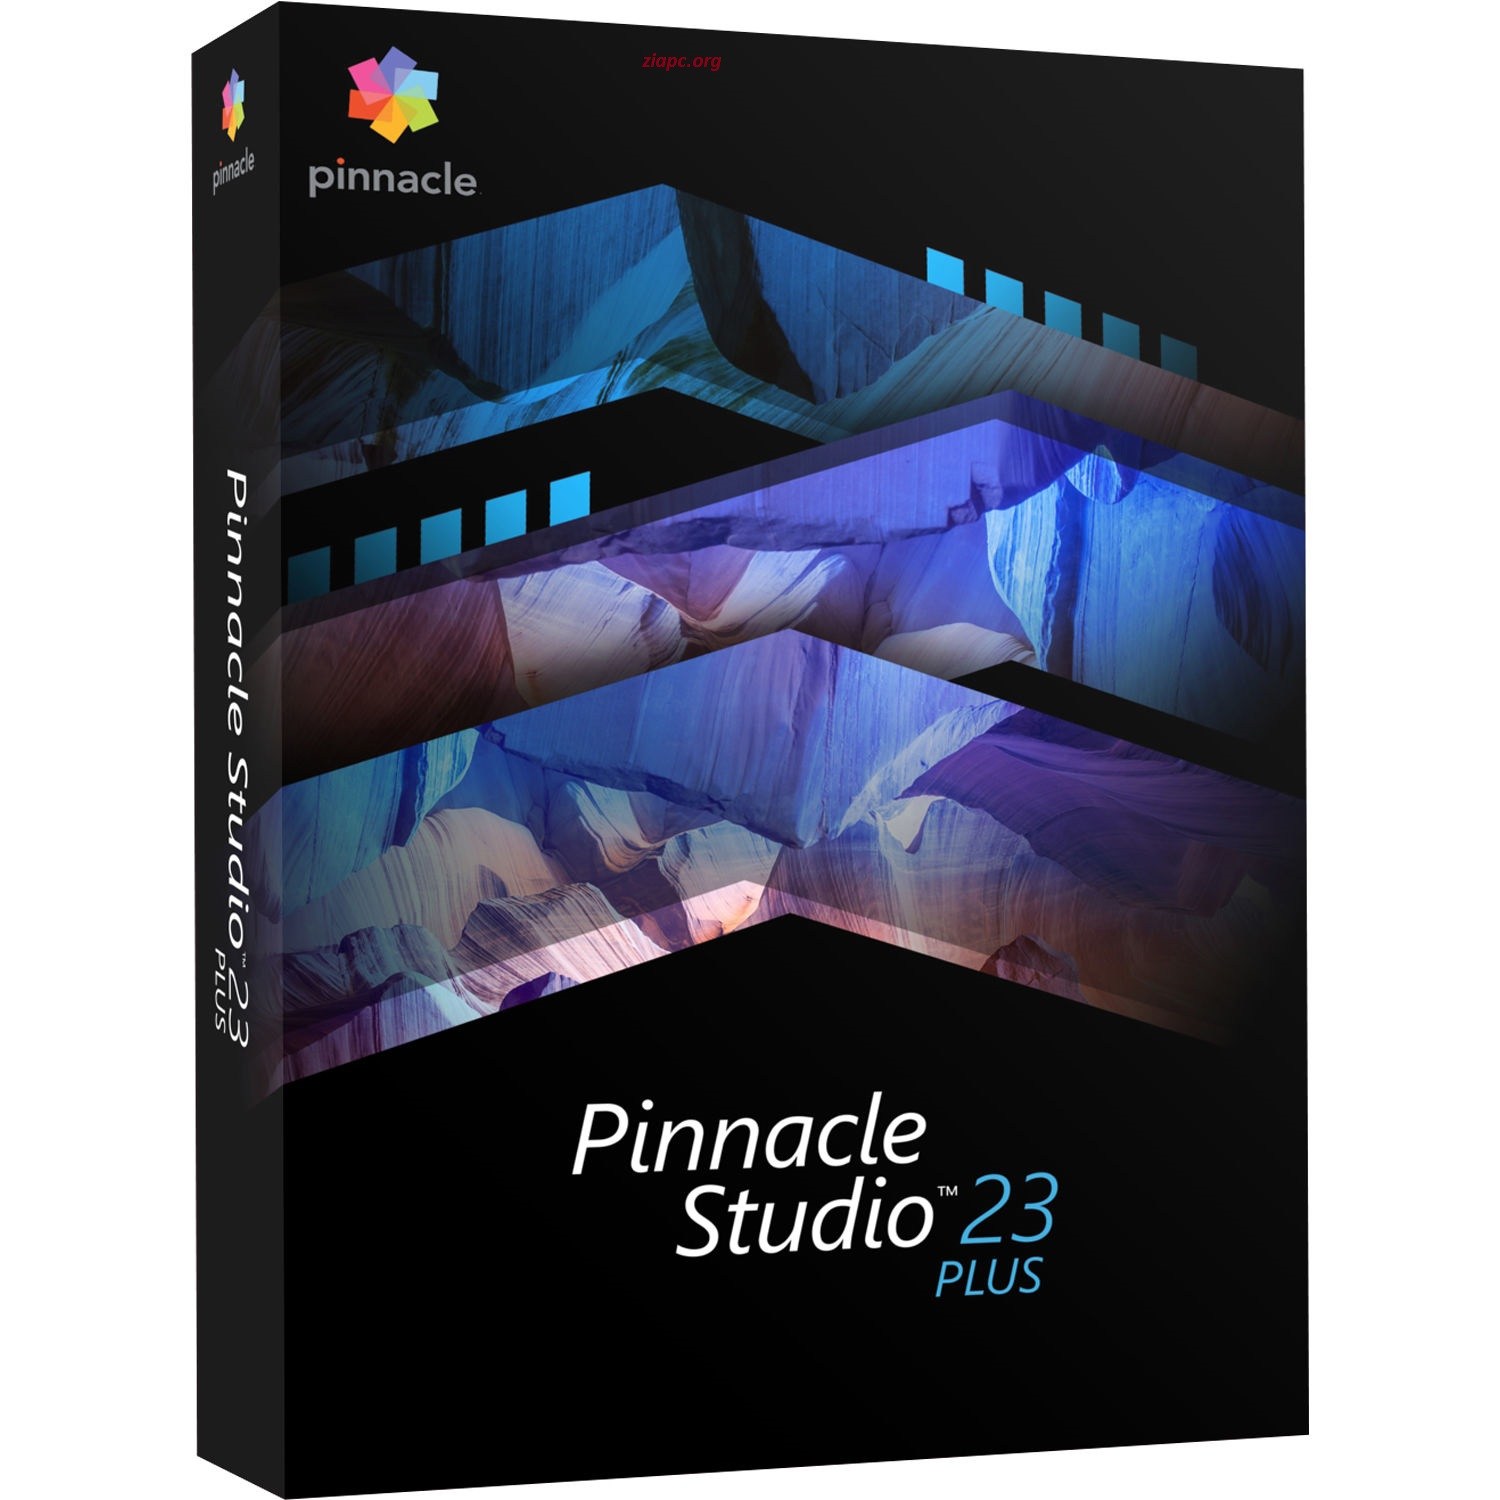 Pinnacle studio 11 free download full version with crack celtx download windows